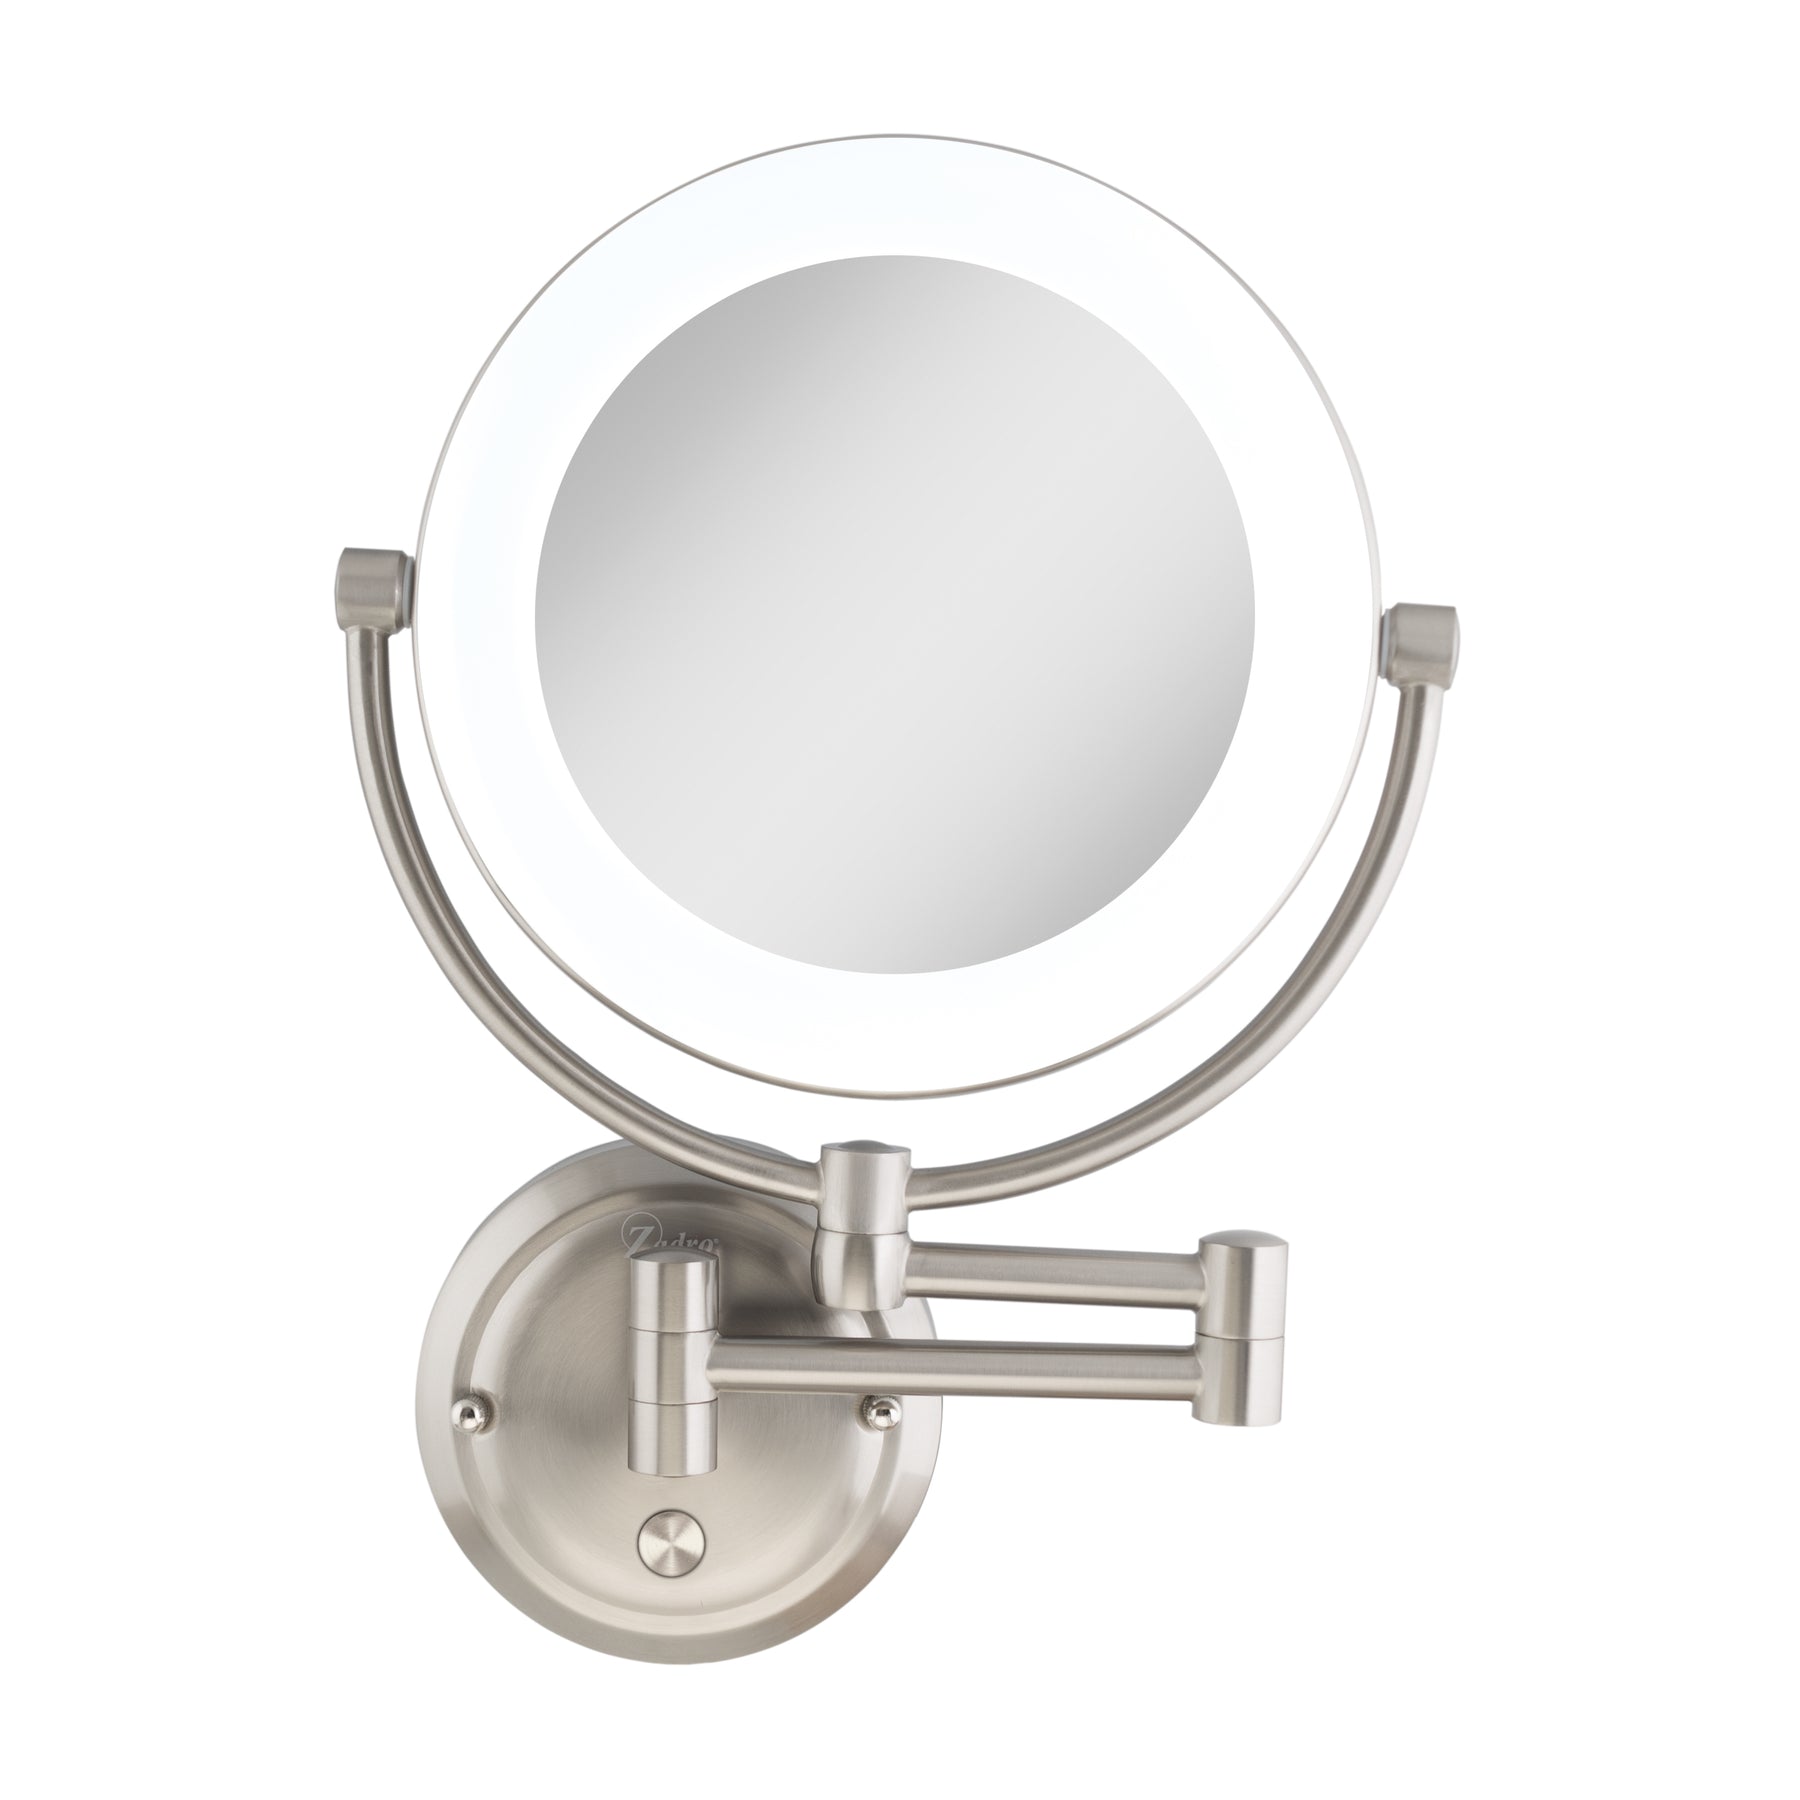 Zadro Lexington LED Light Wall Mounted Makeup Mirrors w/ Magnification